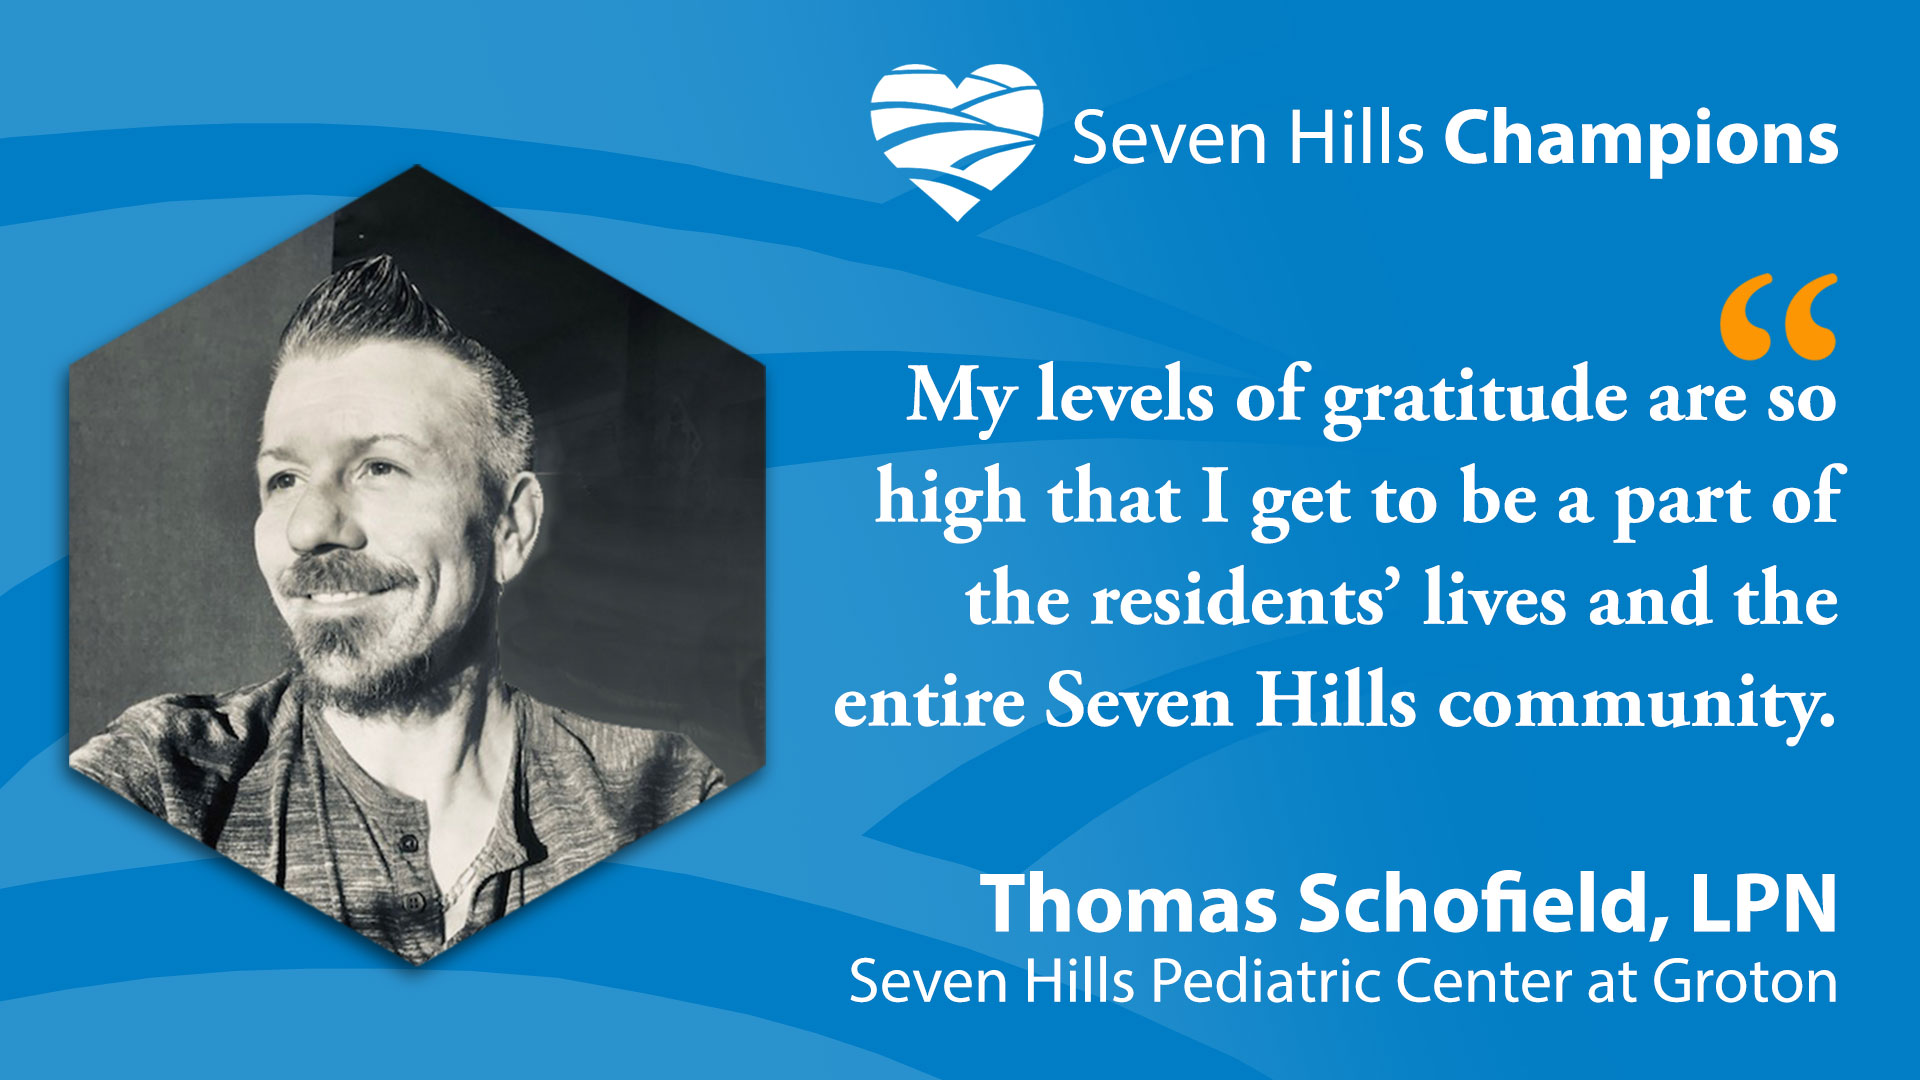 Introducing Seven Hills Champion, Thomas Schofield, LPN, Seven Hills Pediatric Center at Groton